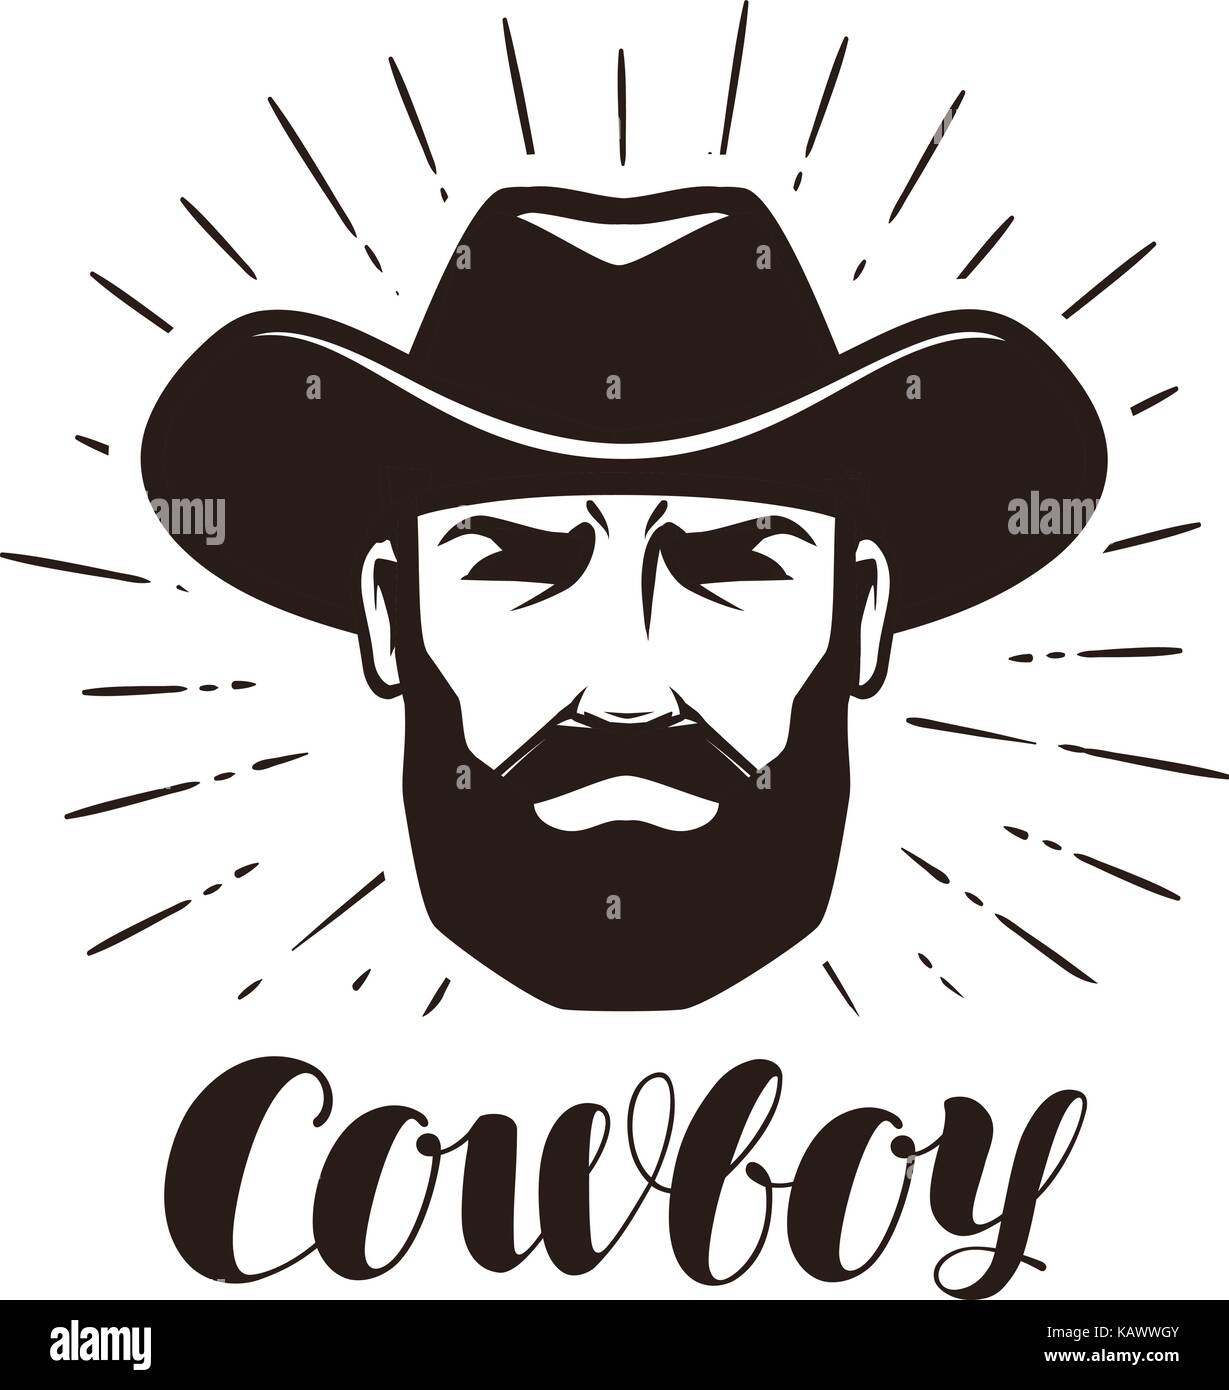 Cowboy logo or label. Portrait of bearded man in hat. Lettering vector illustration Stock Vector